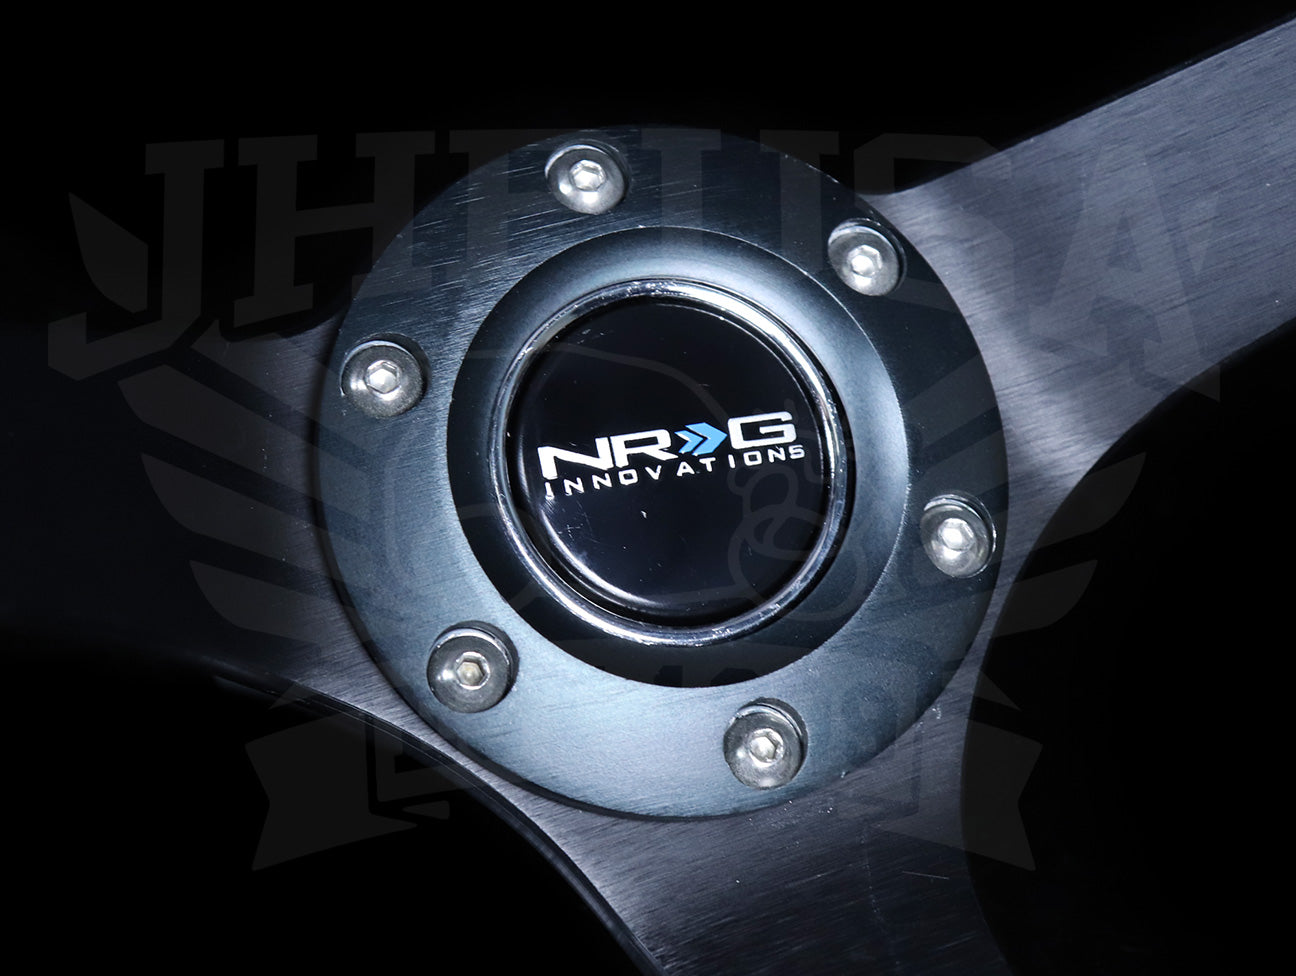 NRG Race Style Sport Steering Wheel - 350mm Black Leather / Black Baseball Stitch